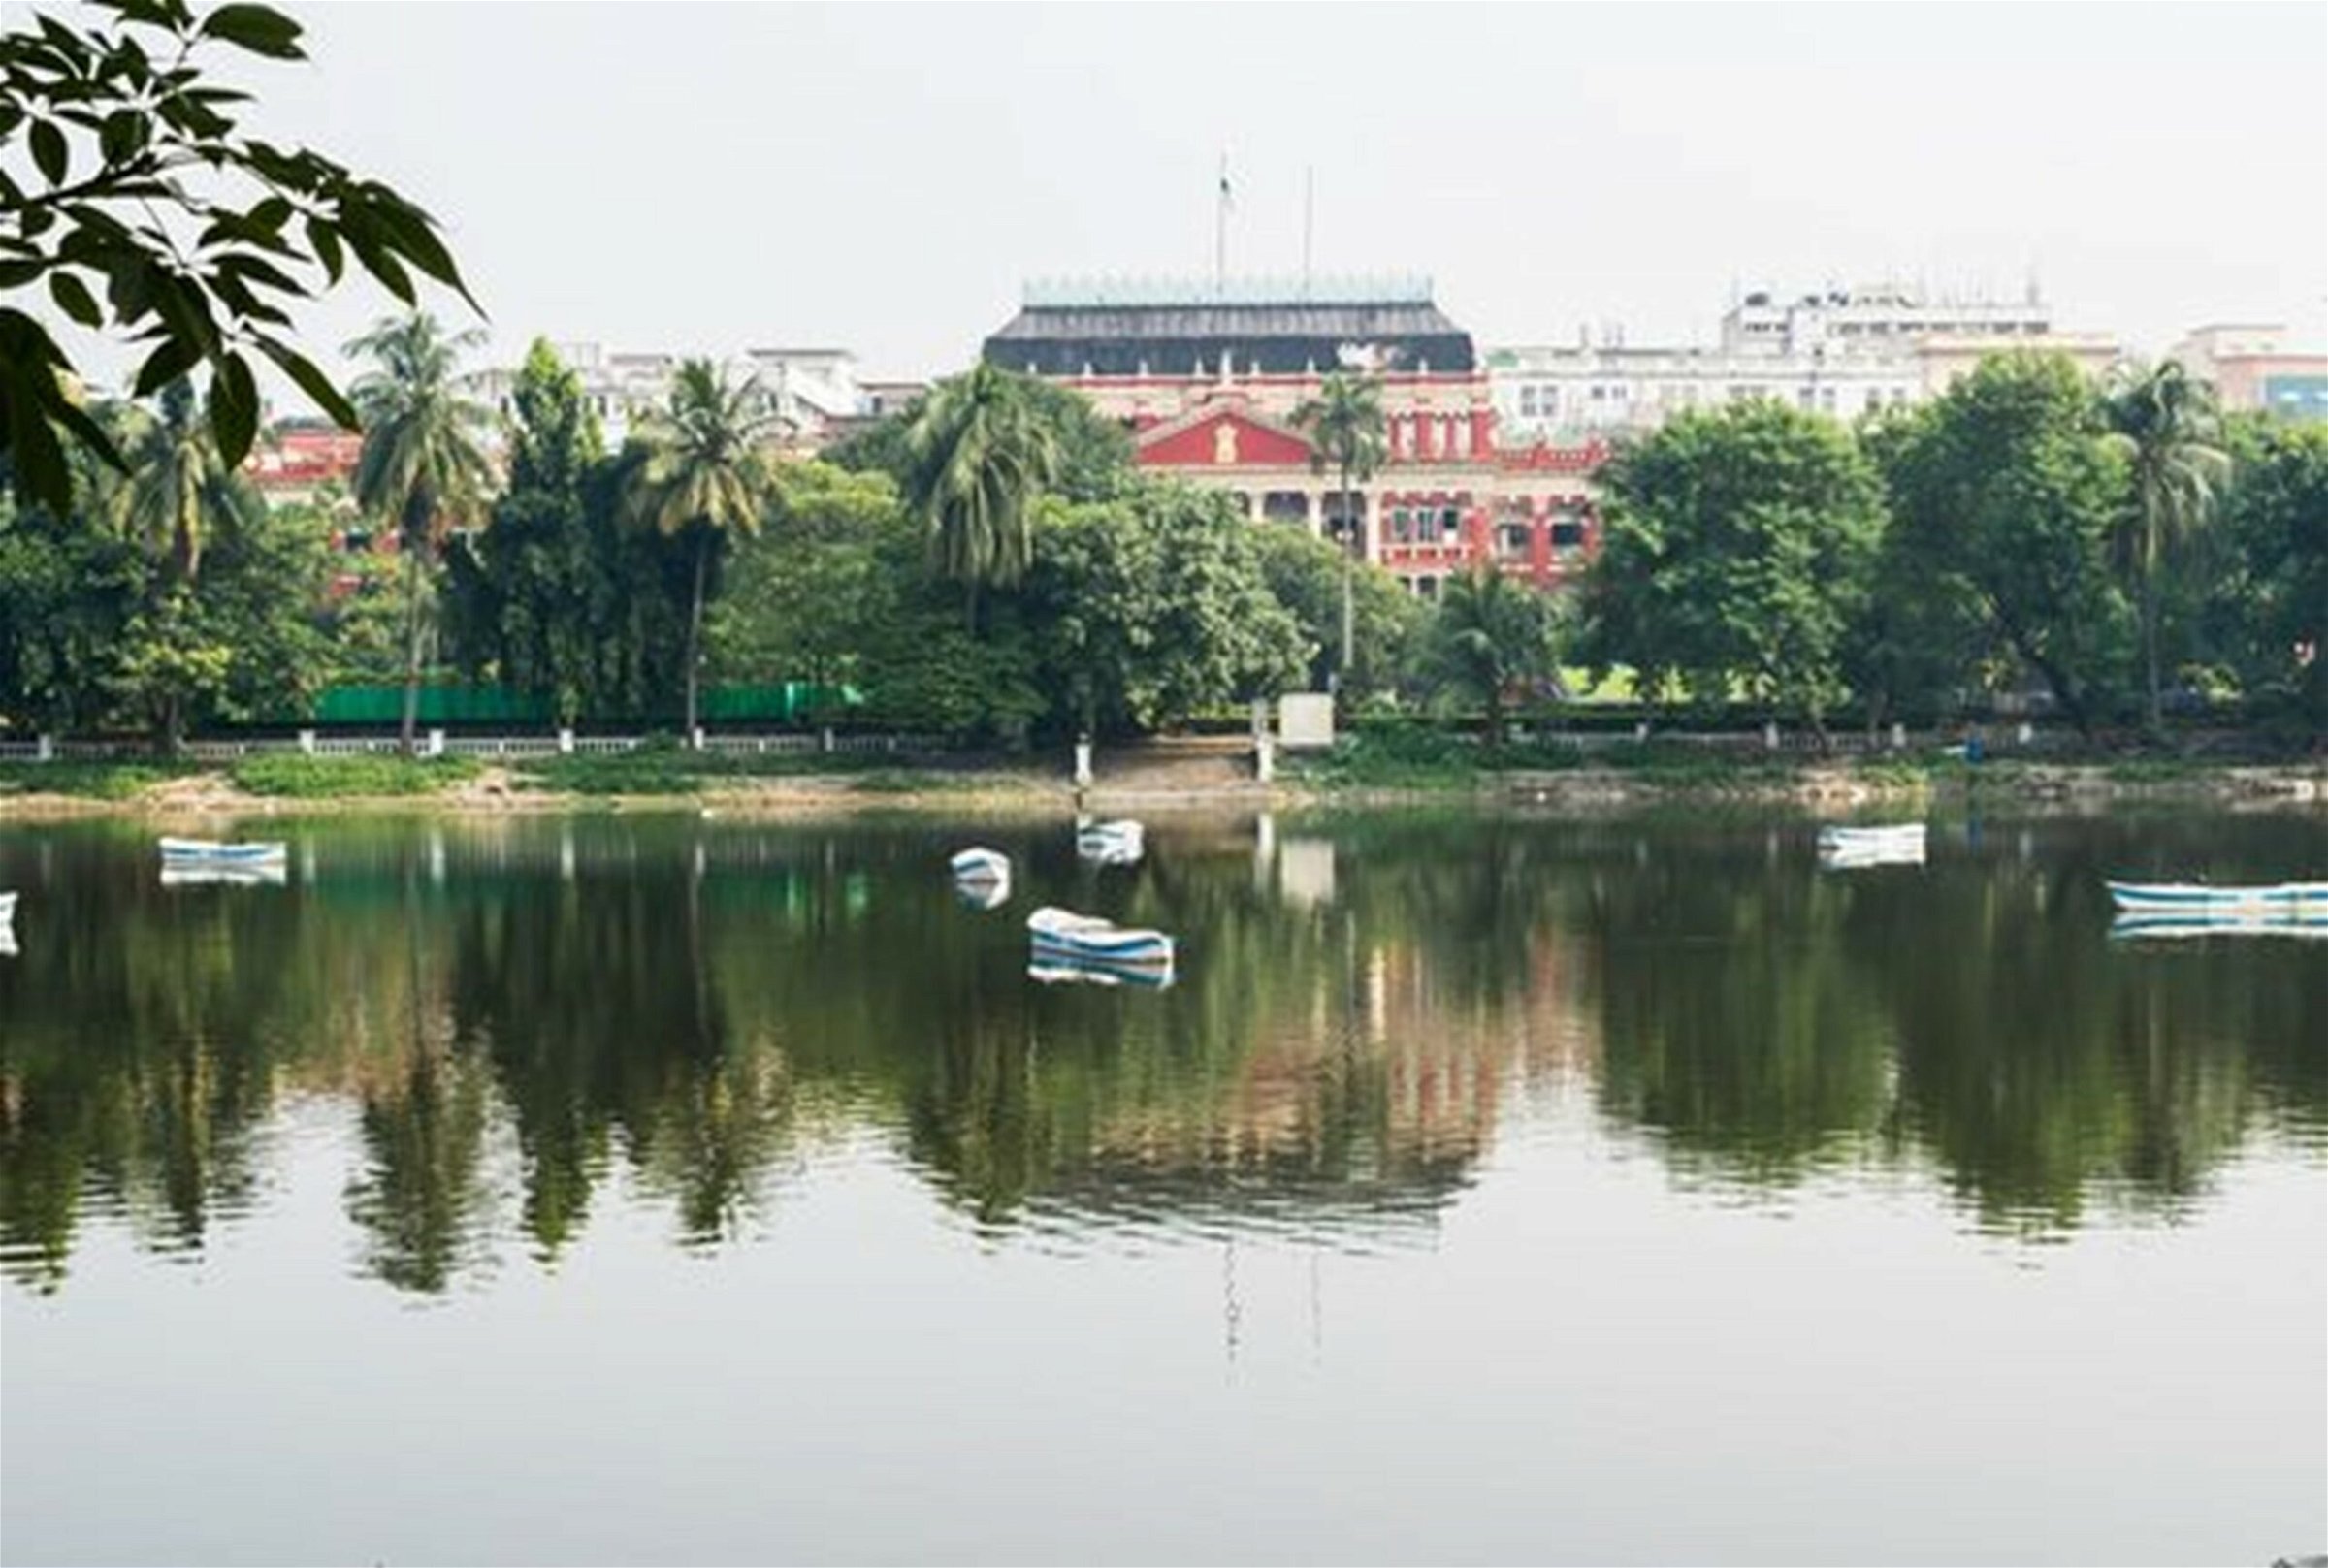 Writer's Building, Kolkata: Origin and interesting facts